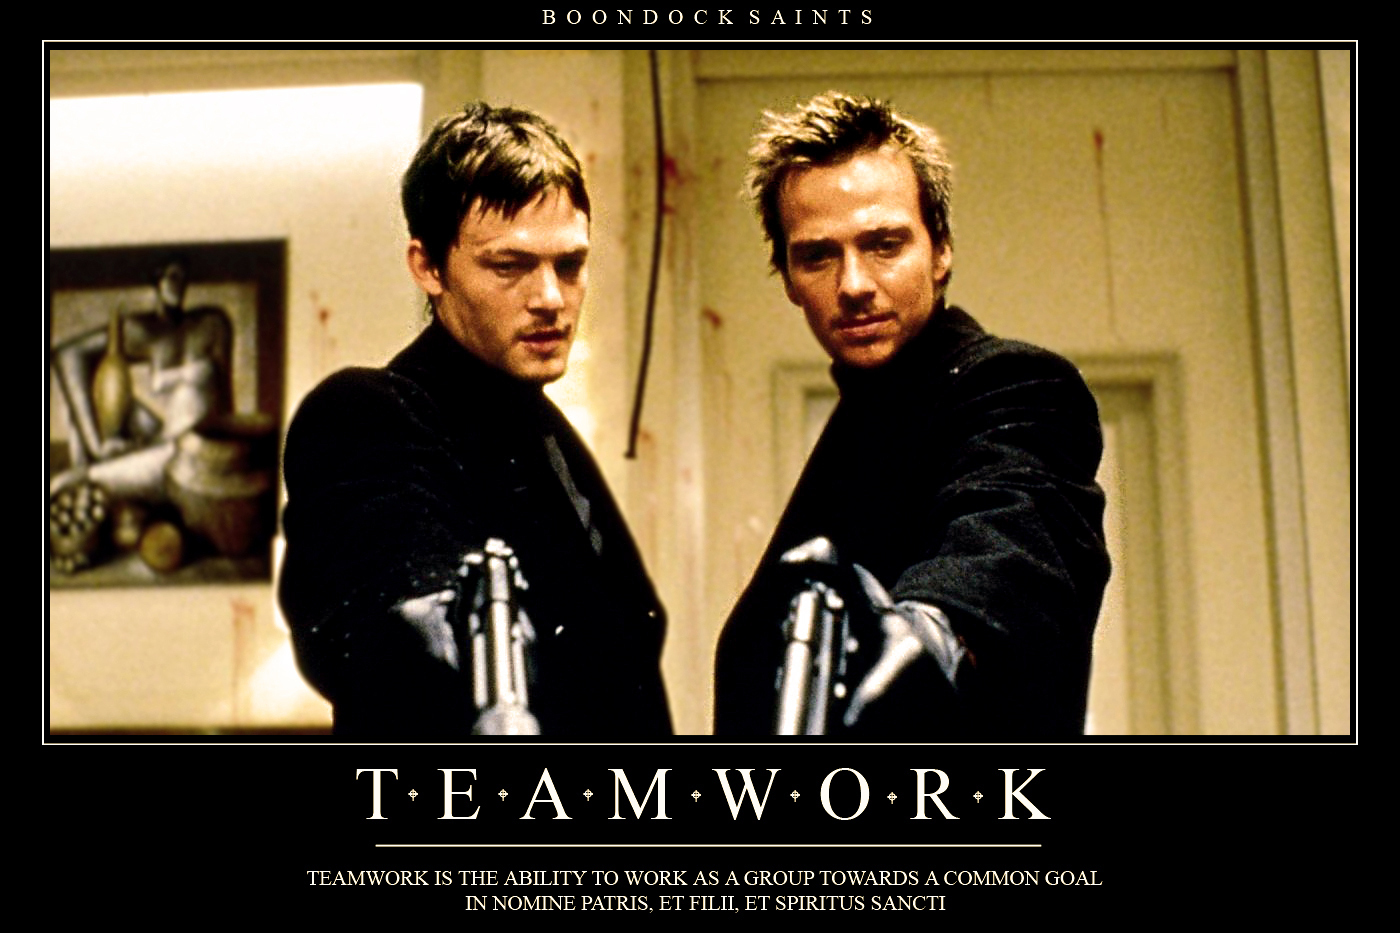 Teamwork-the-boondock-saints-6748562-1400-933.jpg